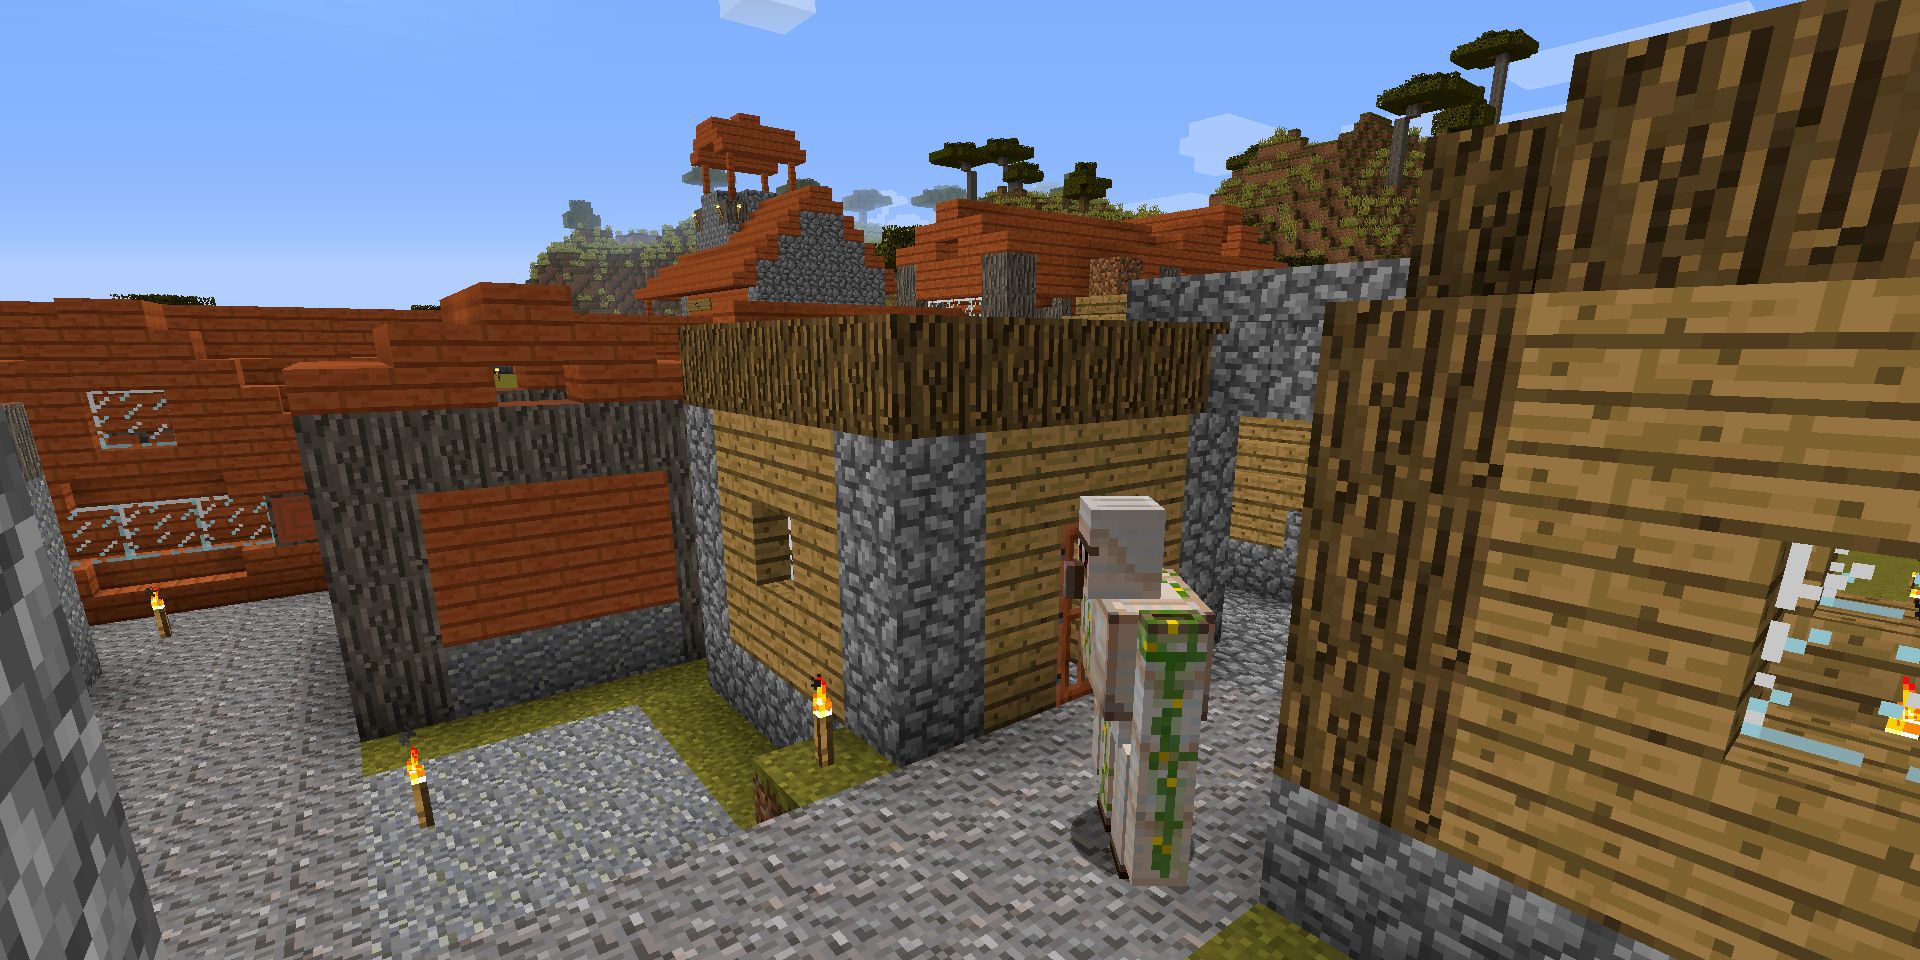 In-game screenshot of an Iron Golem in a village in Minecraft.